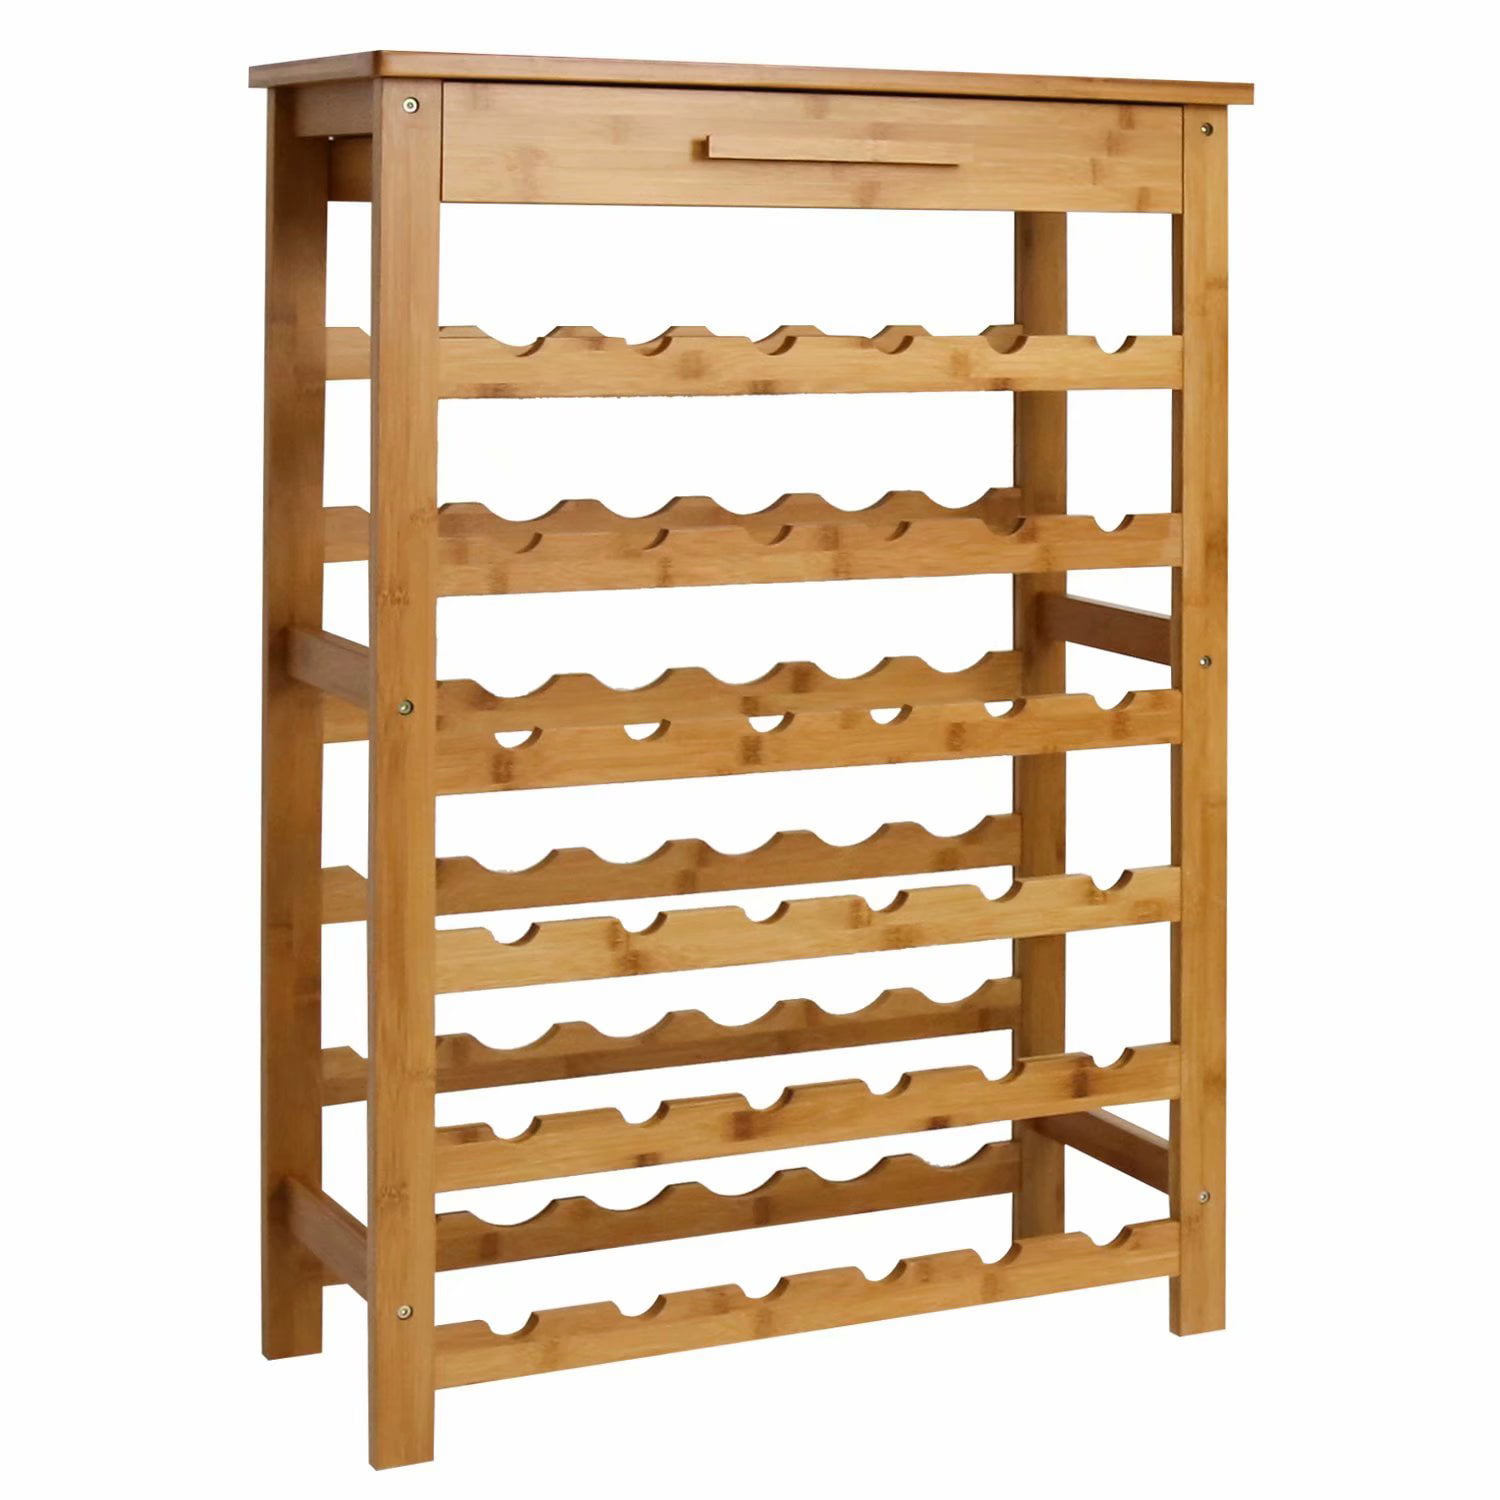 Kinbor Bamboo Wine Standing Rack Storage with Drawer 36-Bottle